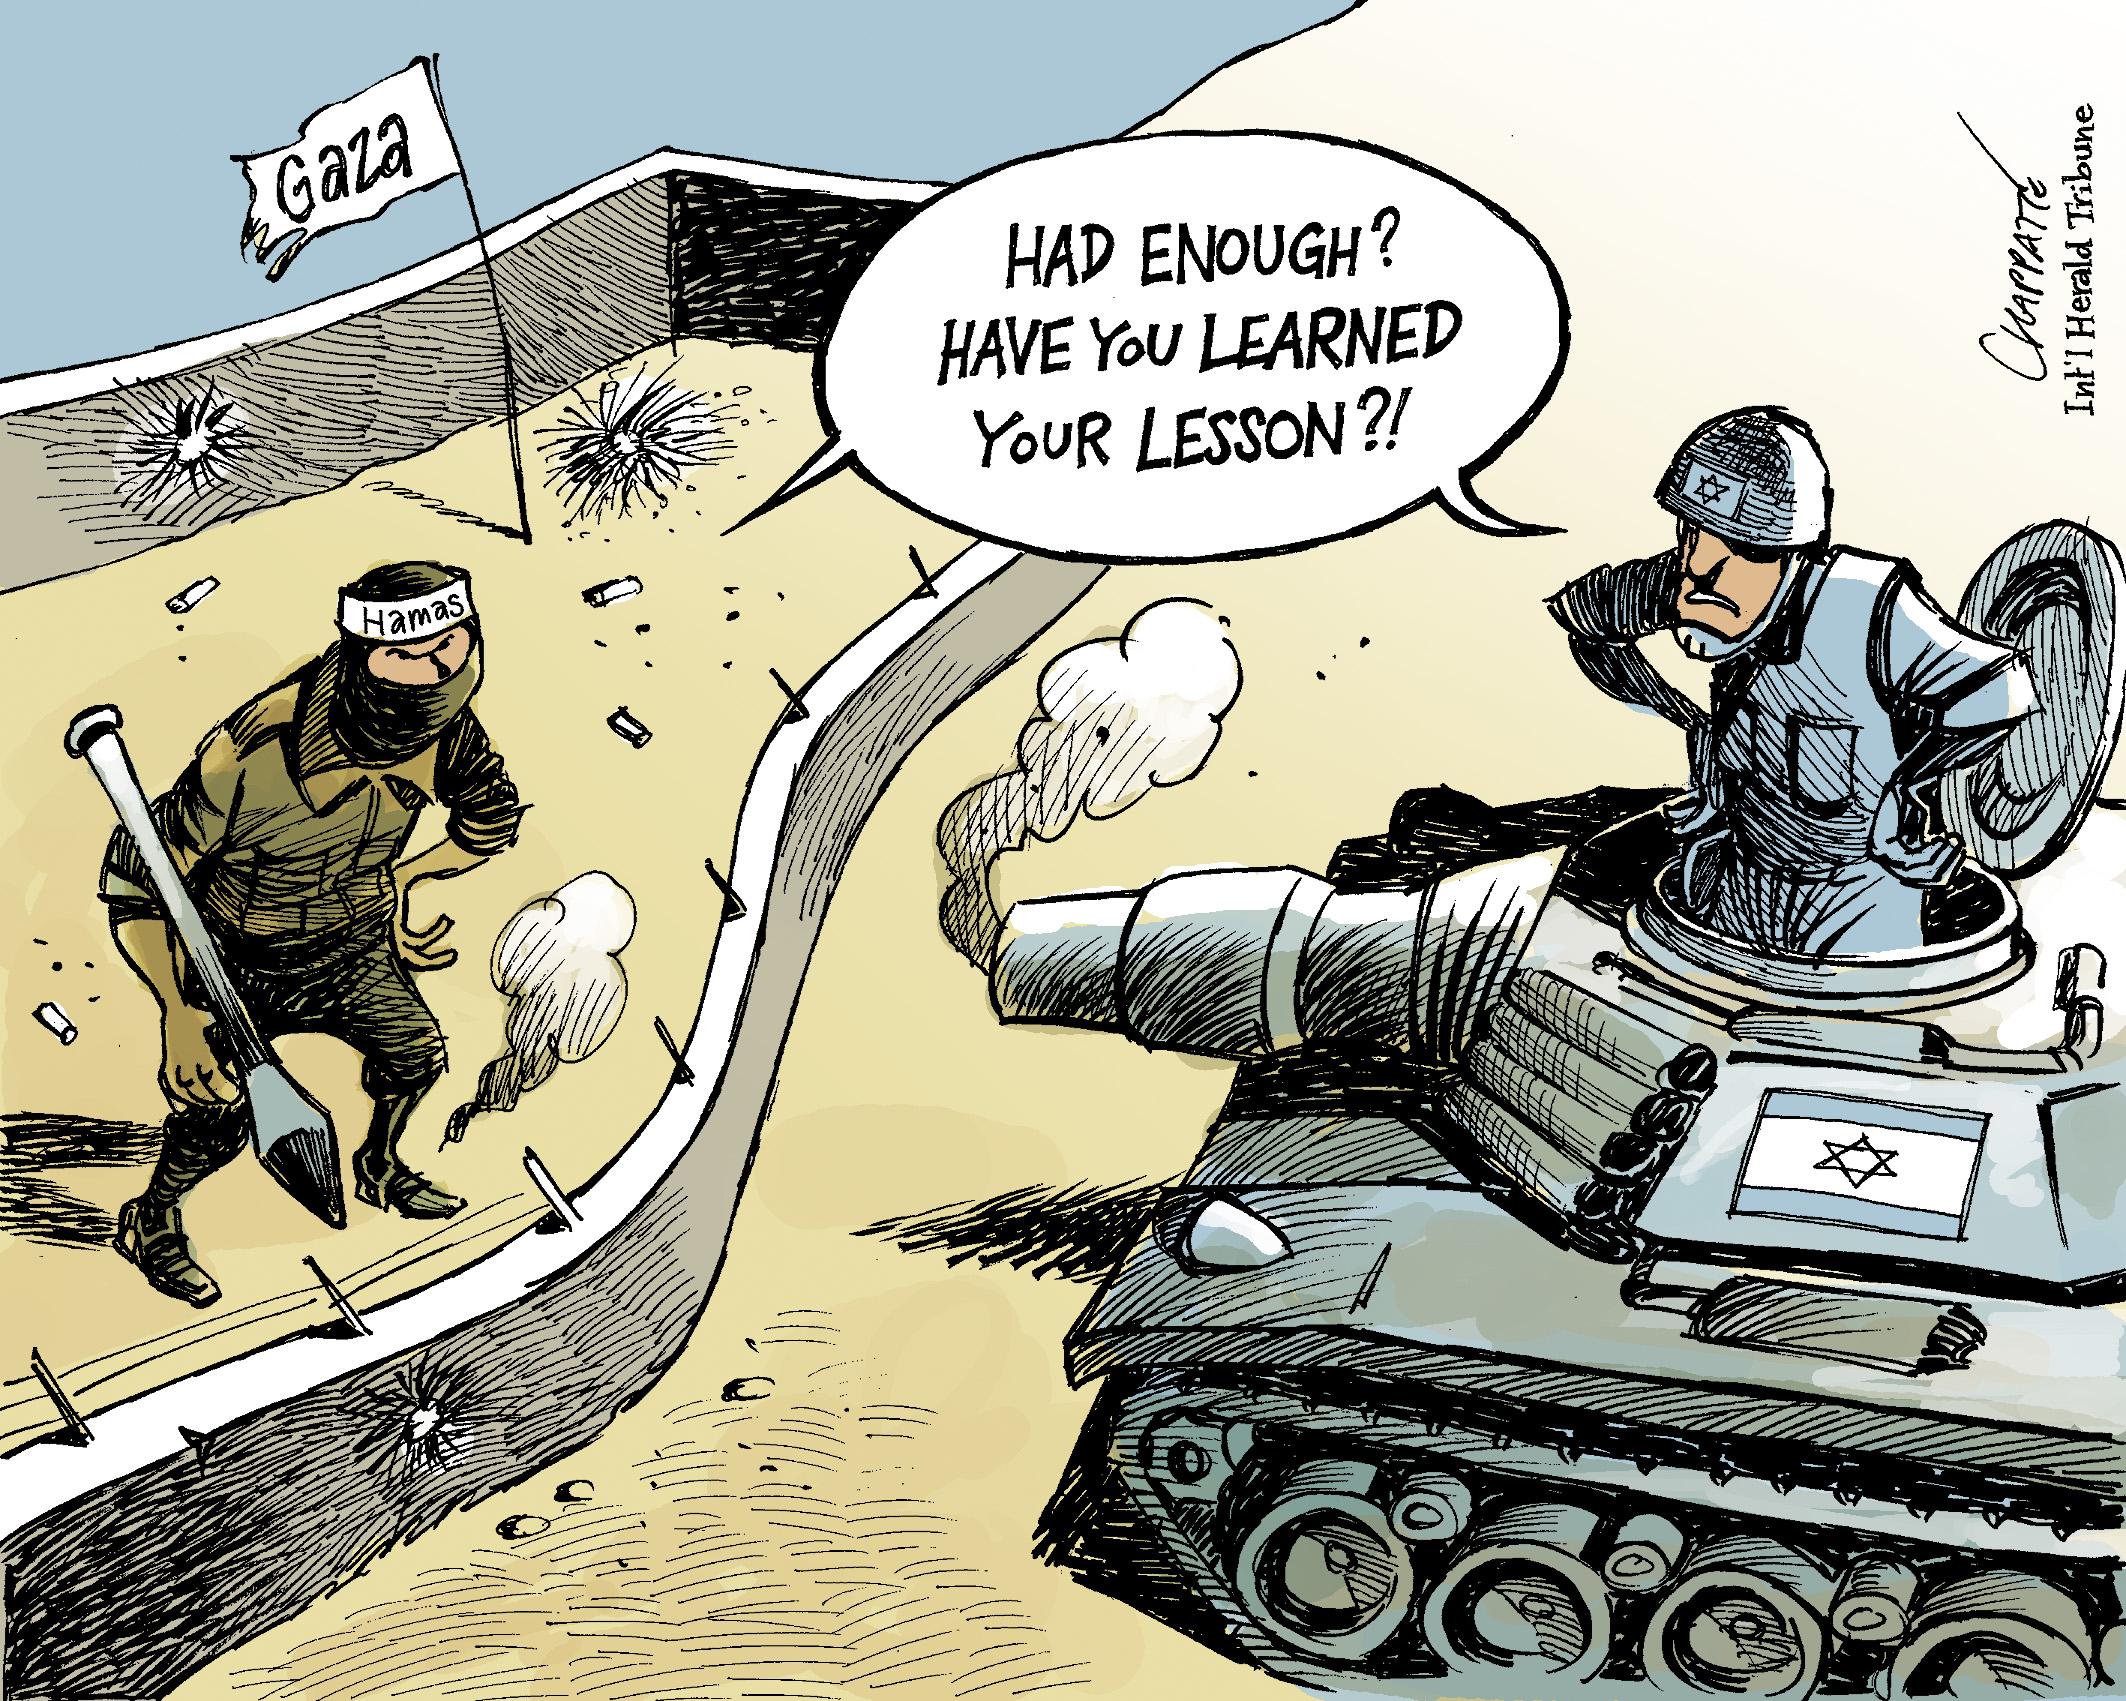 Truce between Israel and Hamas